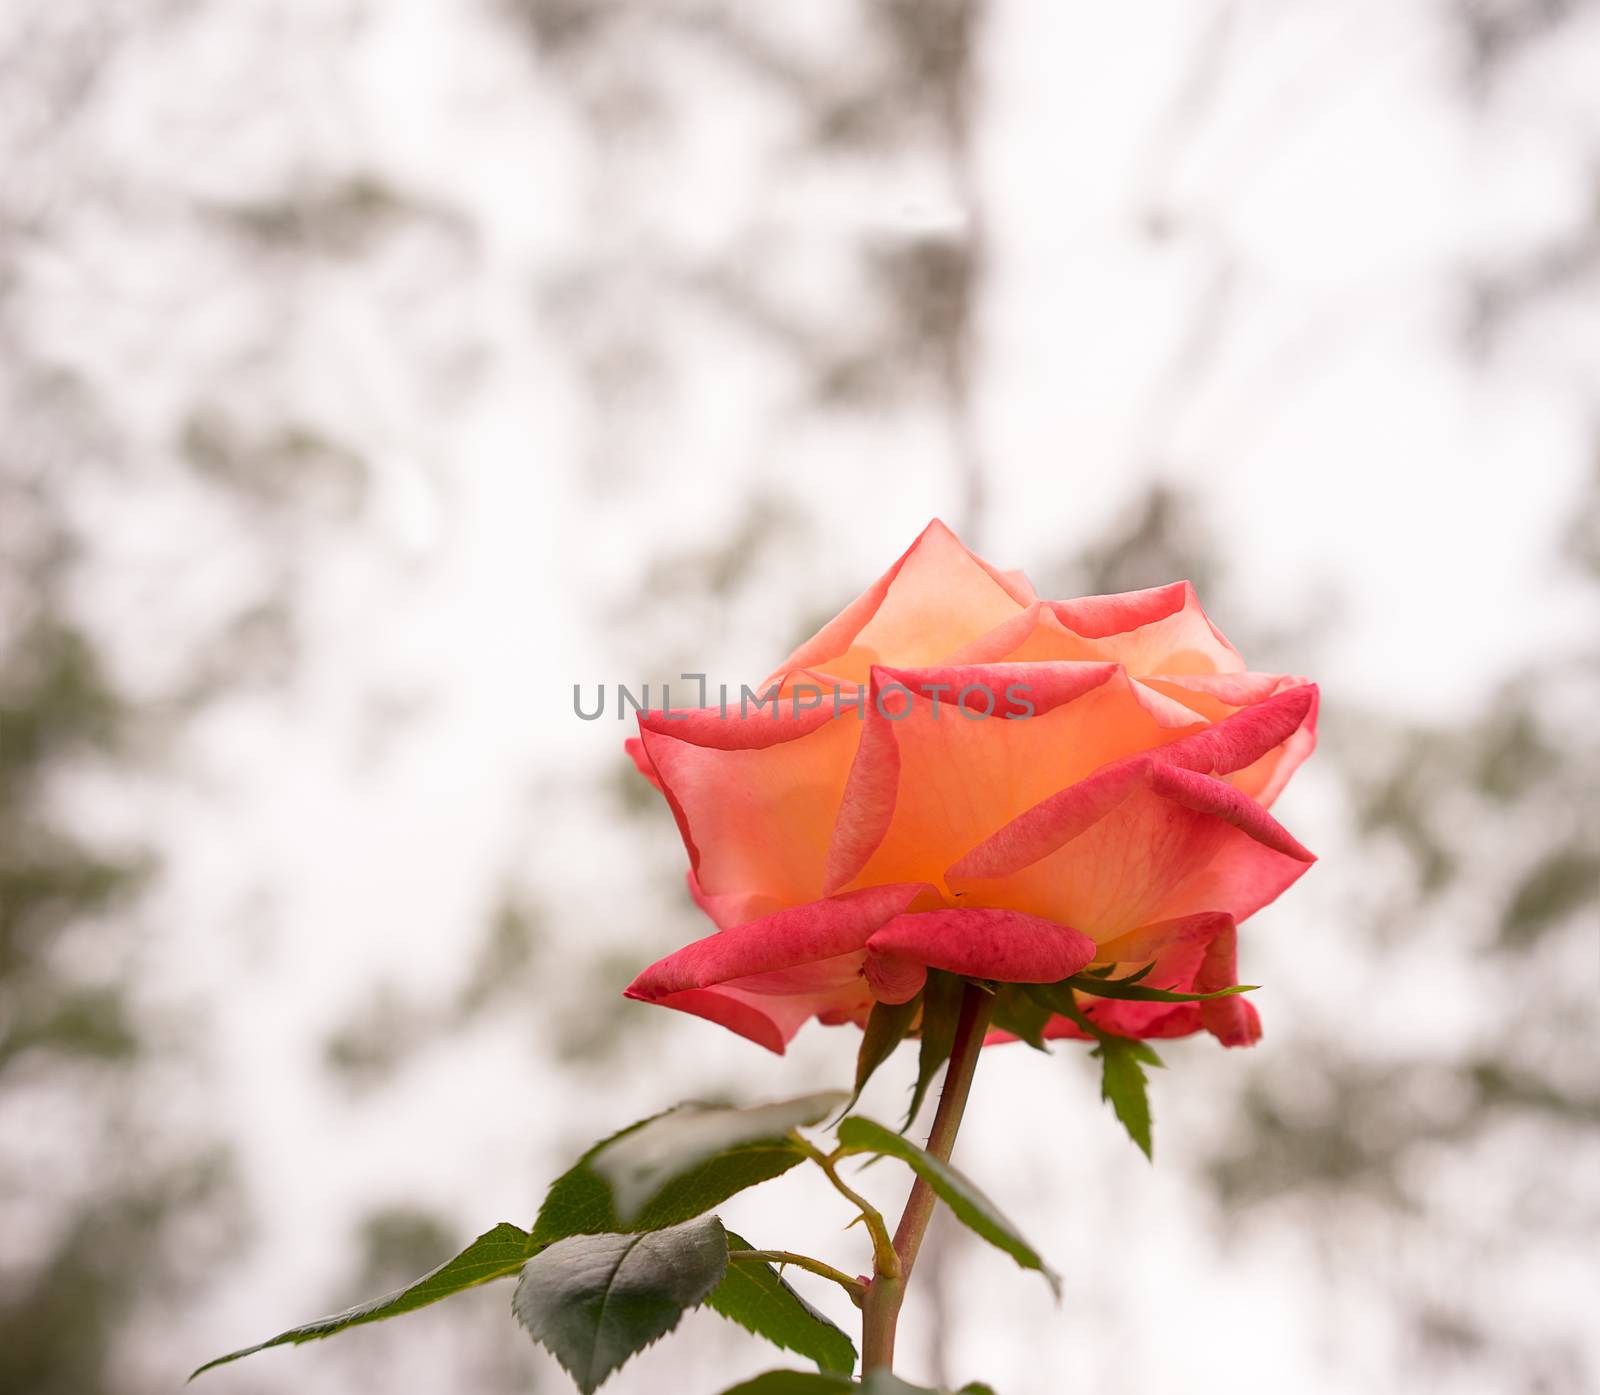 orange rose flower by sherj